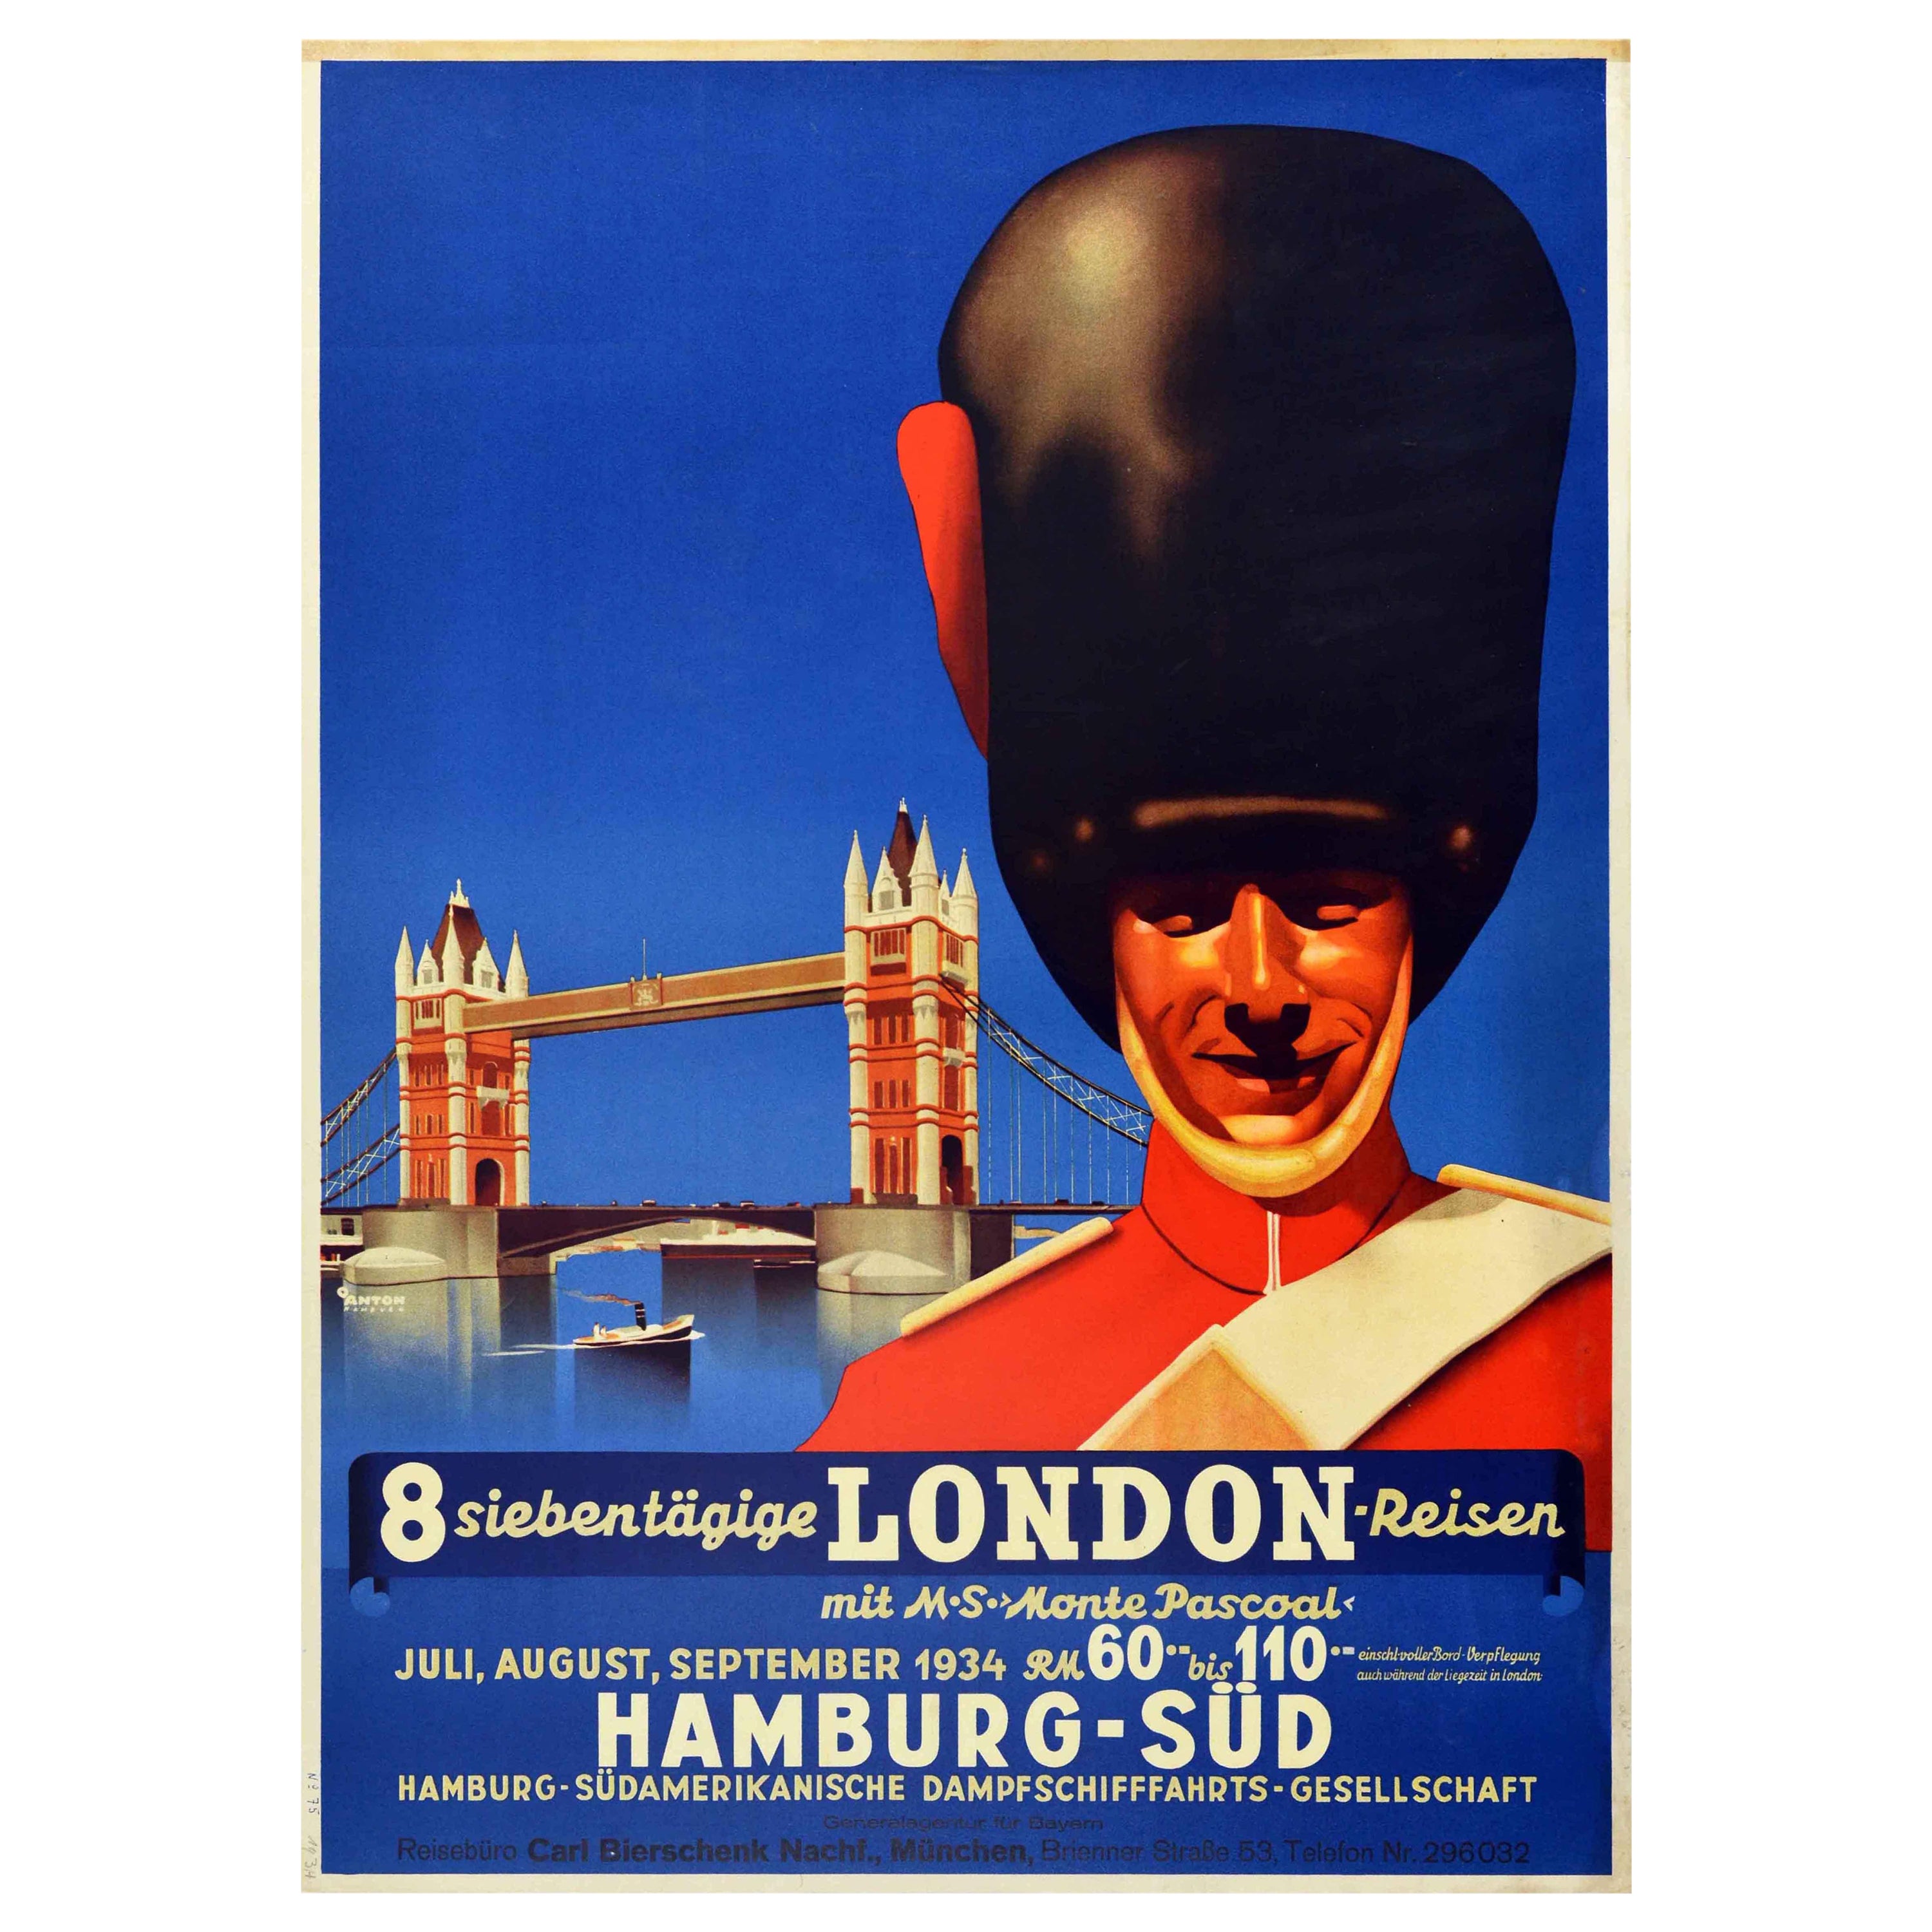 Original Vintage Travel Poster London Cruise Ft. Royal Guard Tower Bridge Design